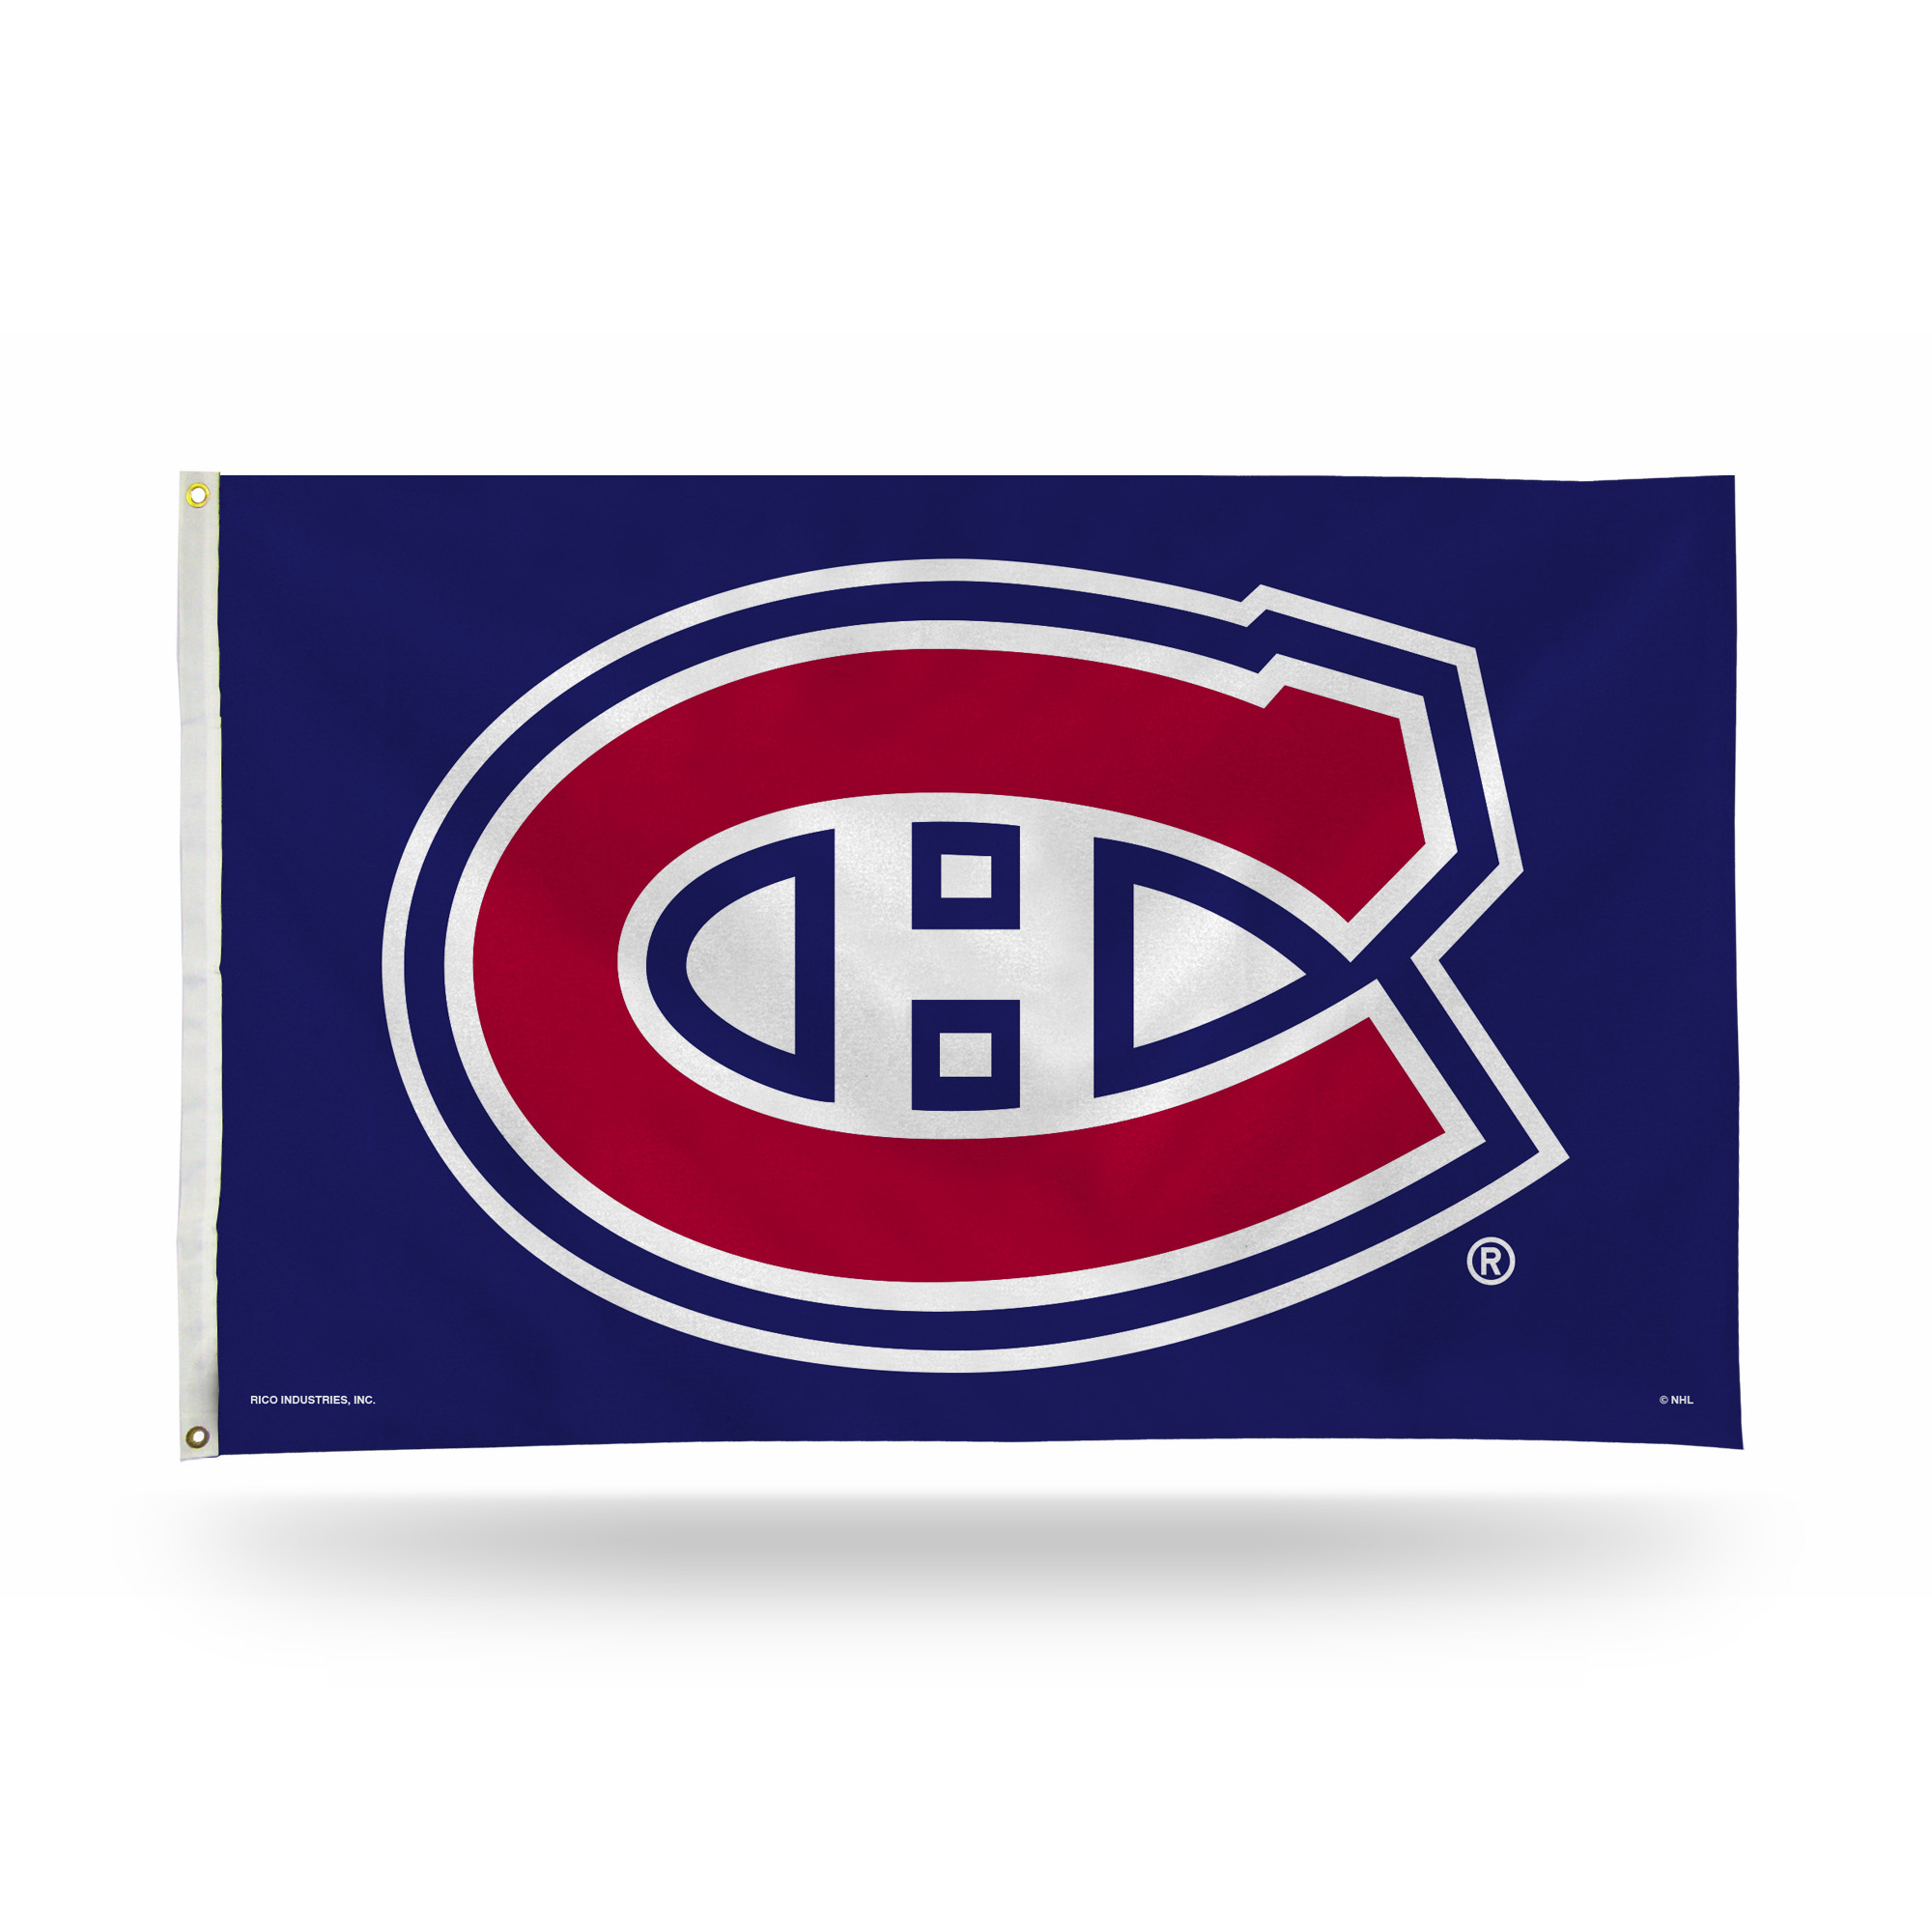 Rico Industries NHL Hockey Montreal Canadiens Standard 3' x 5' Banner Flag